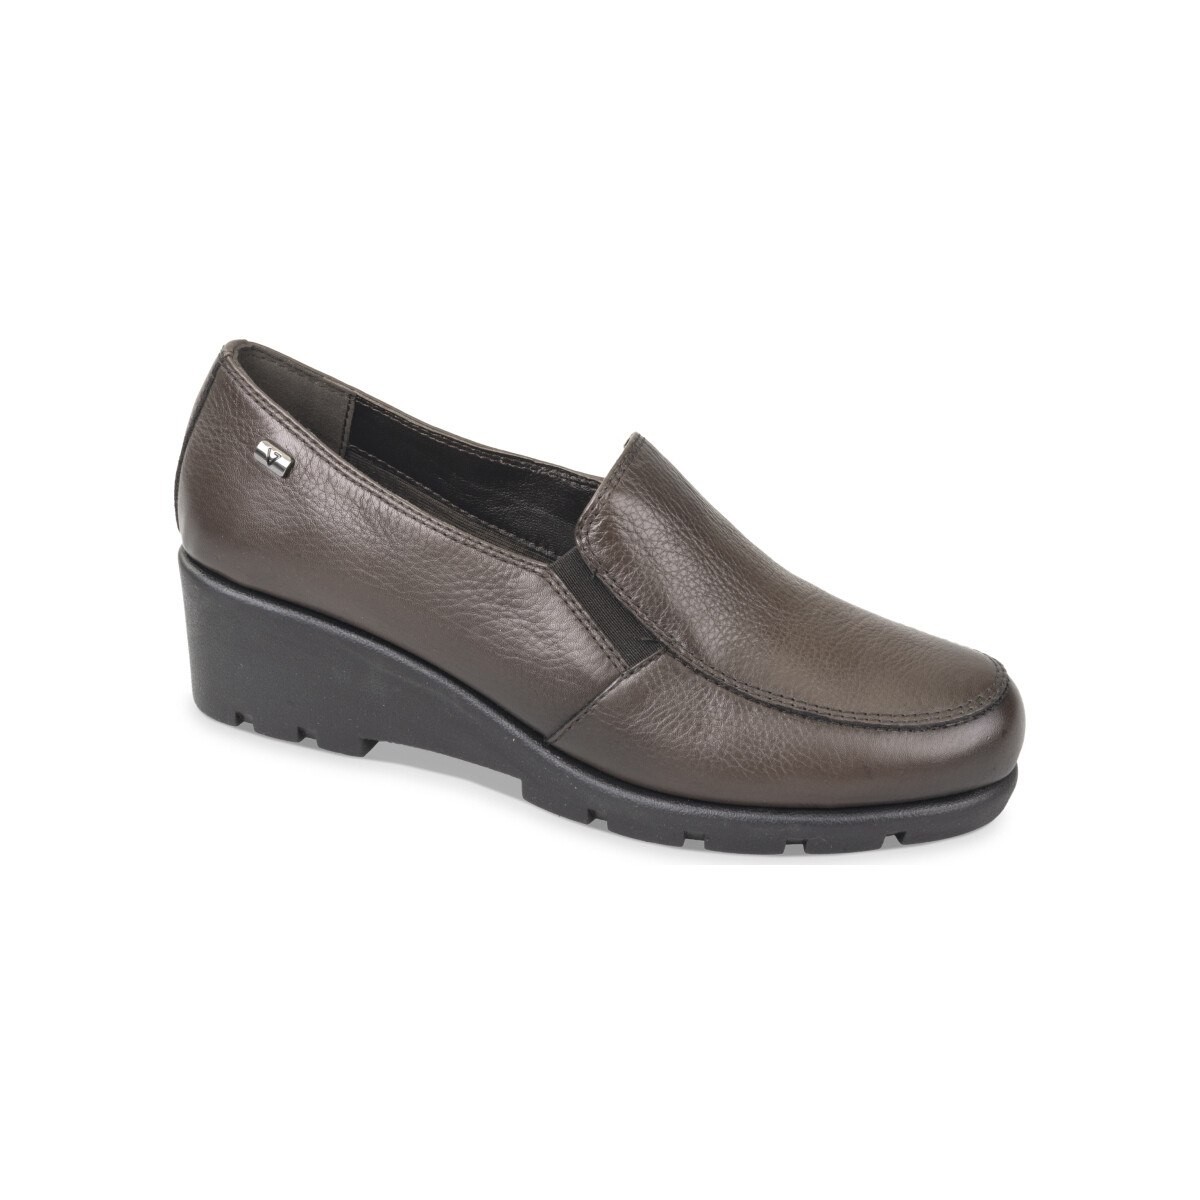 Chaussures Femme Mocassins Valleverde VS10400-1001 Marron